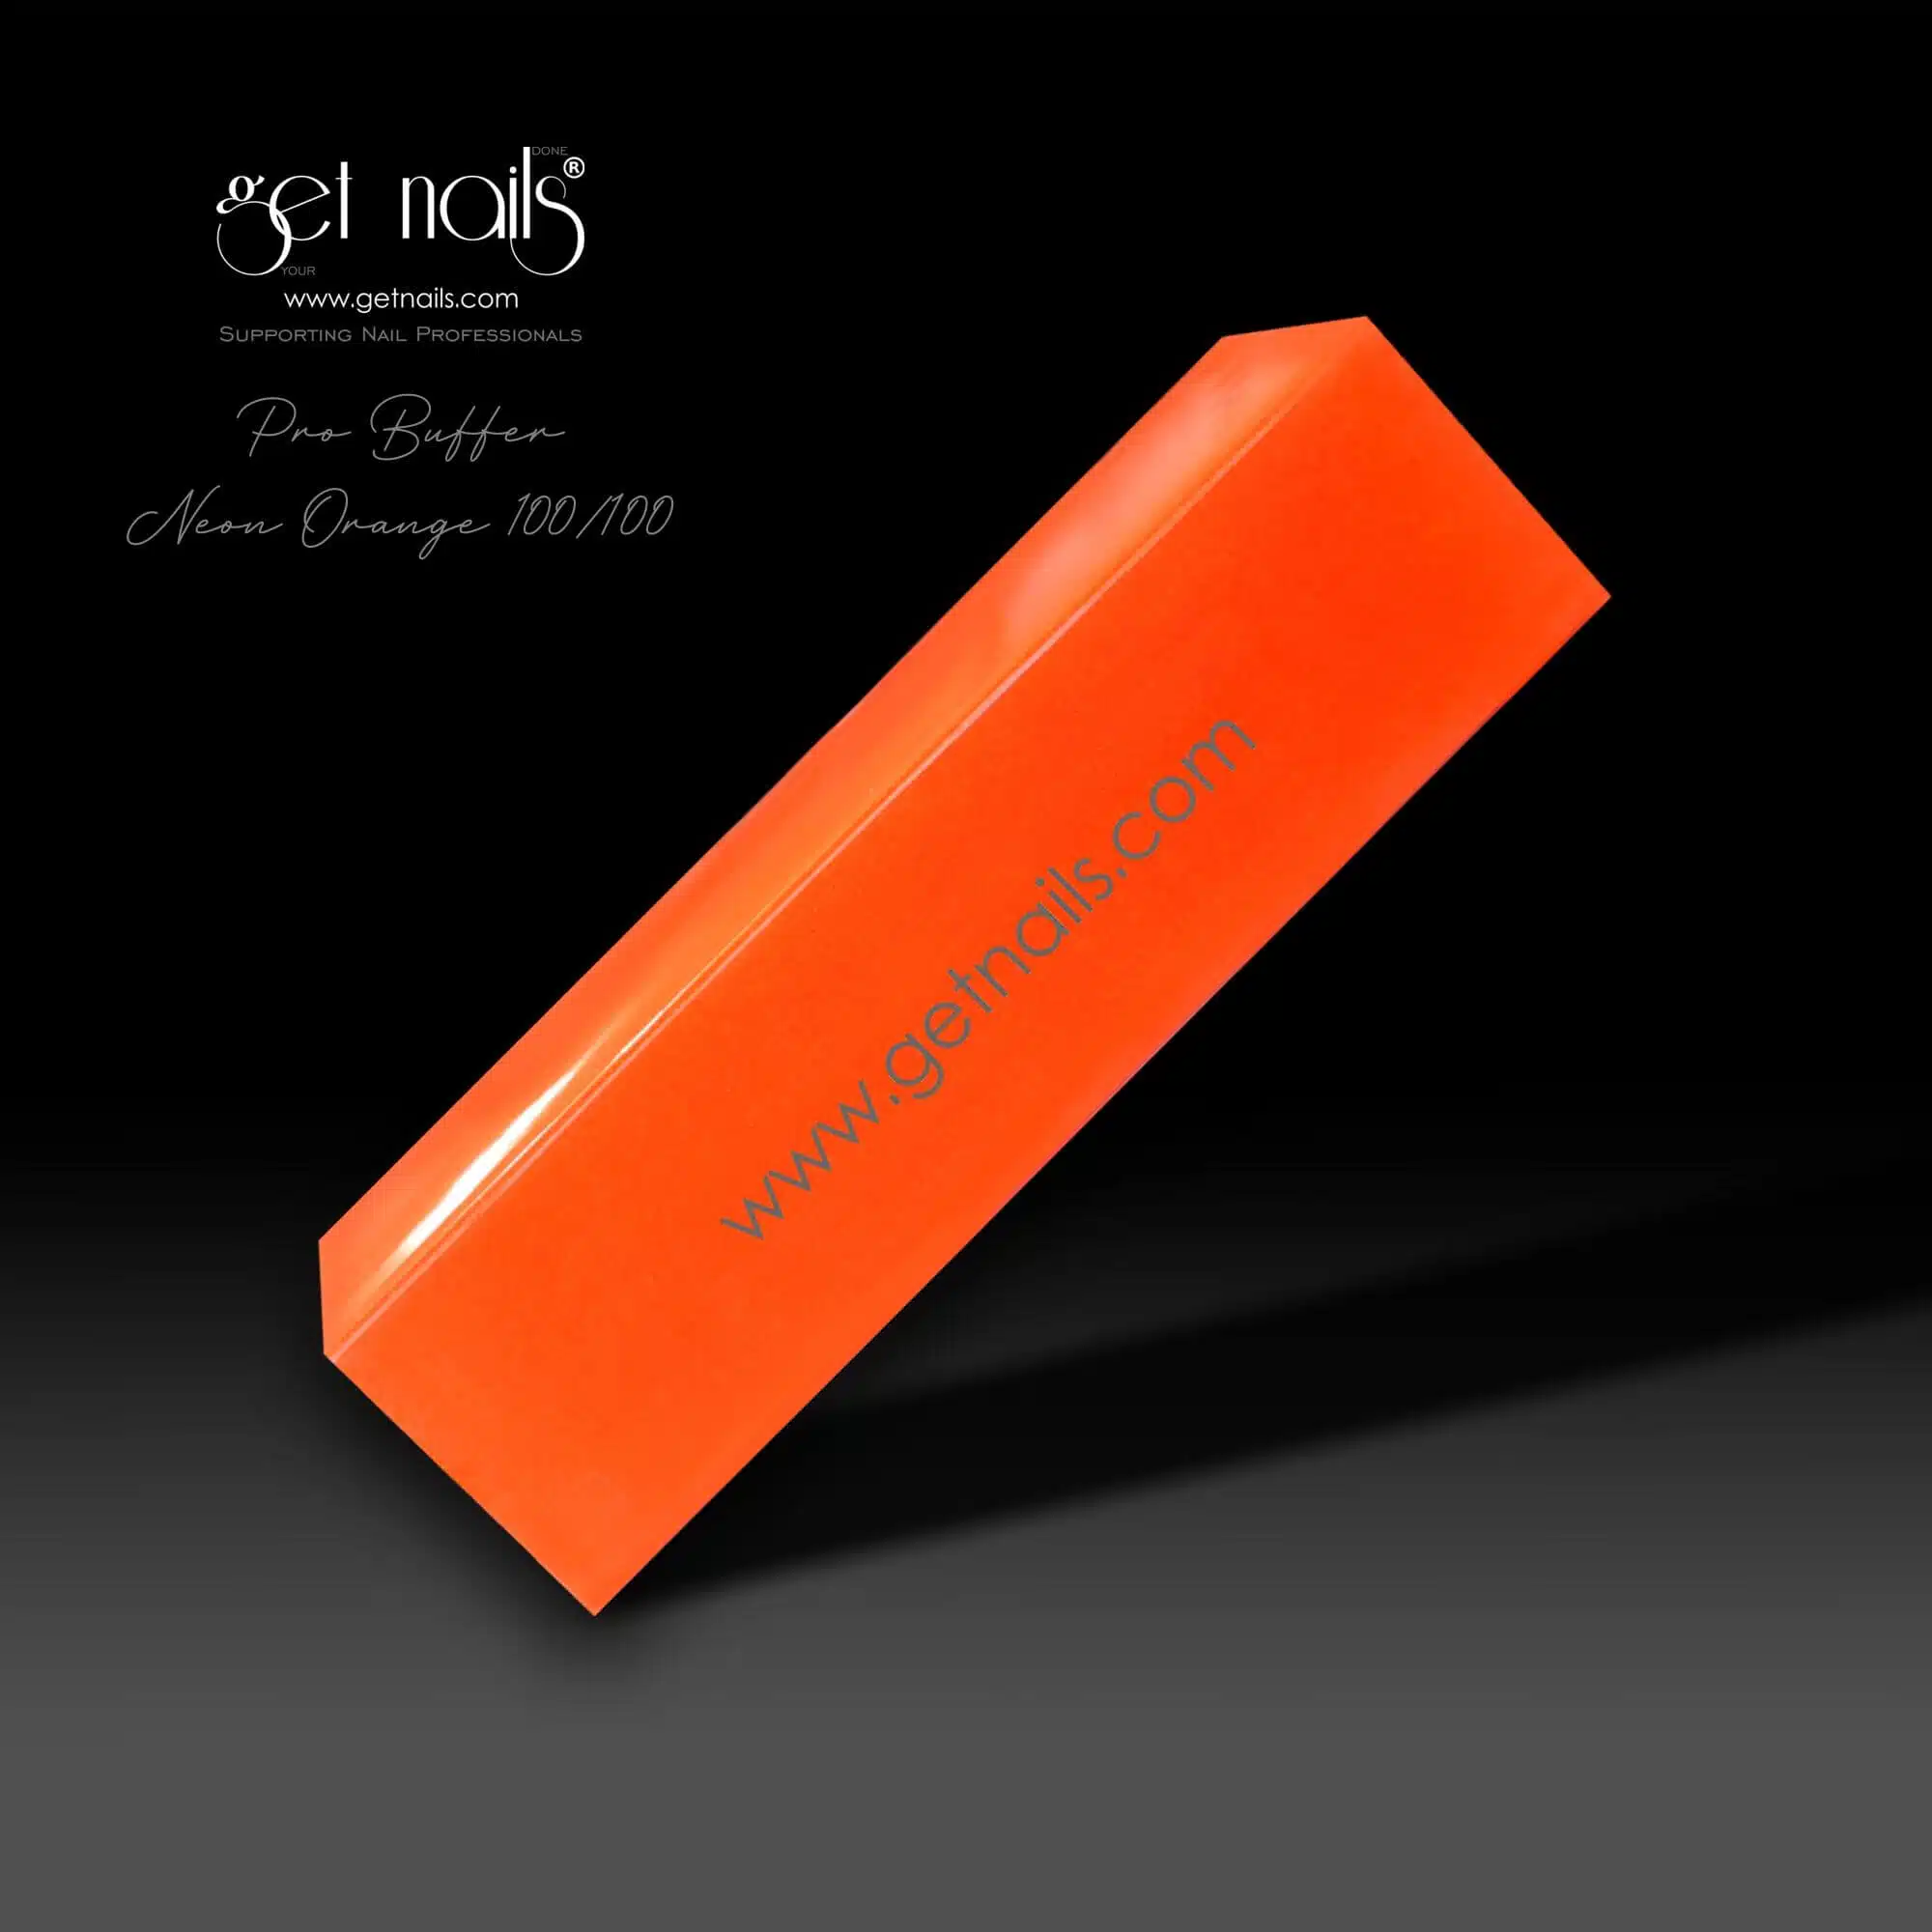 Get Nails Austria - Buffer Neon Orange 100/100